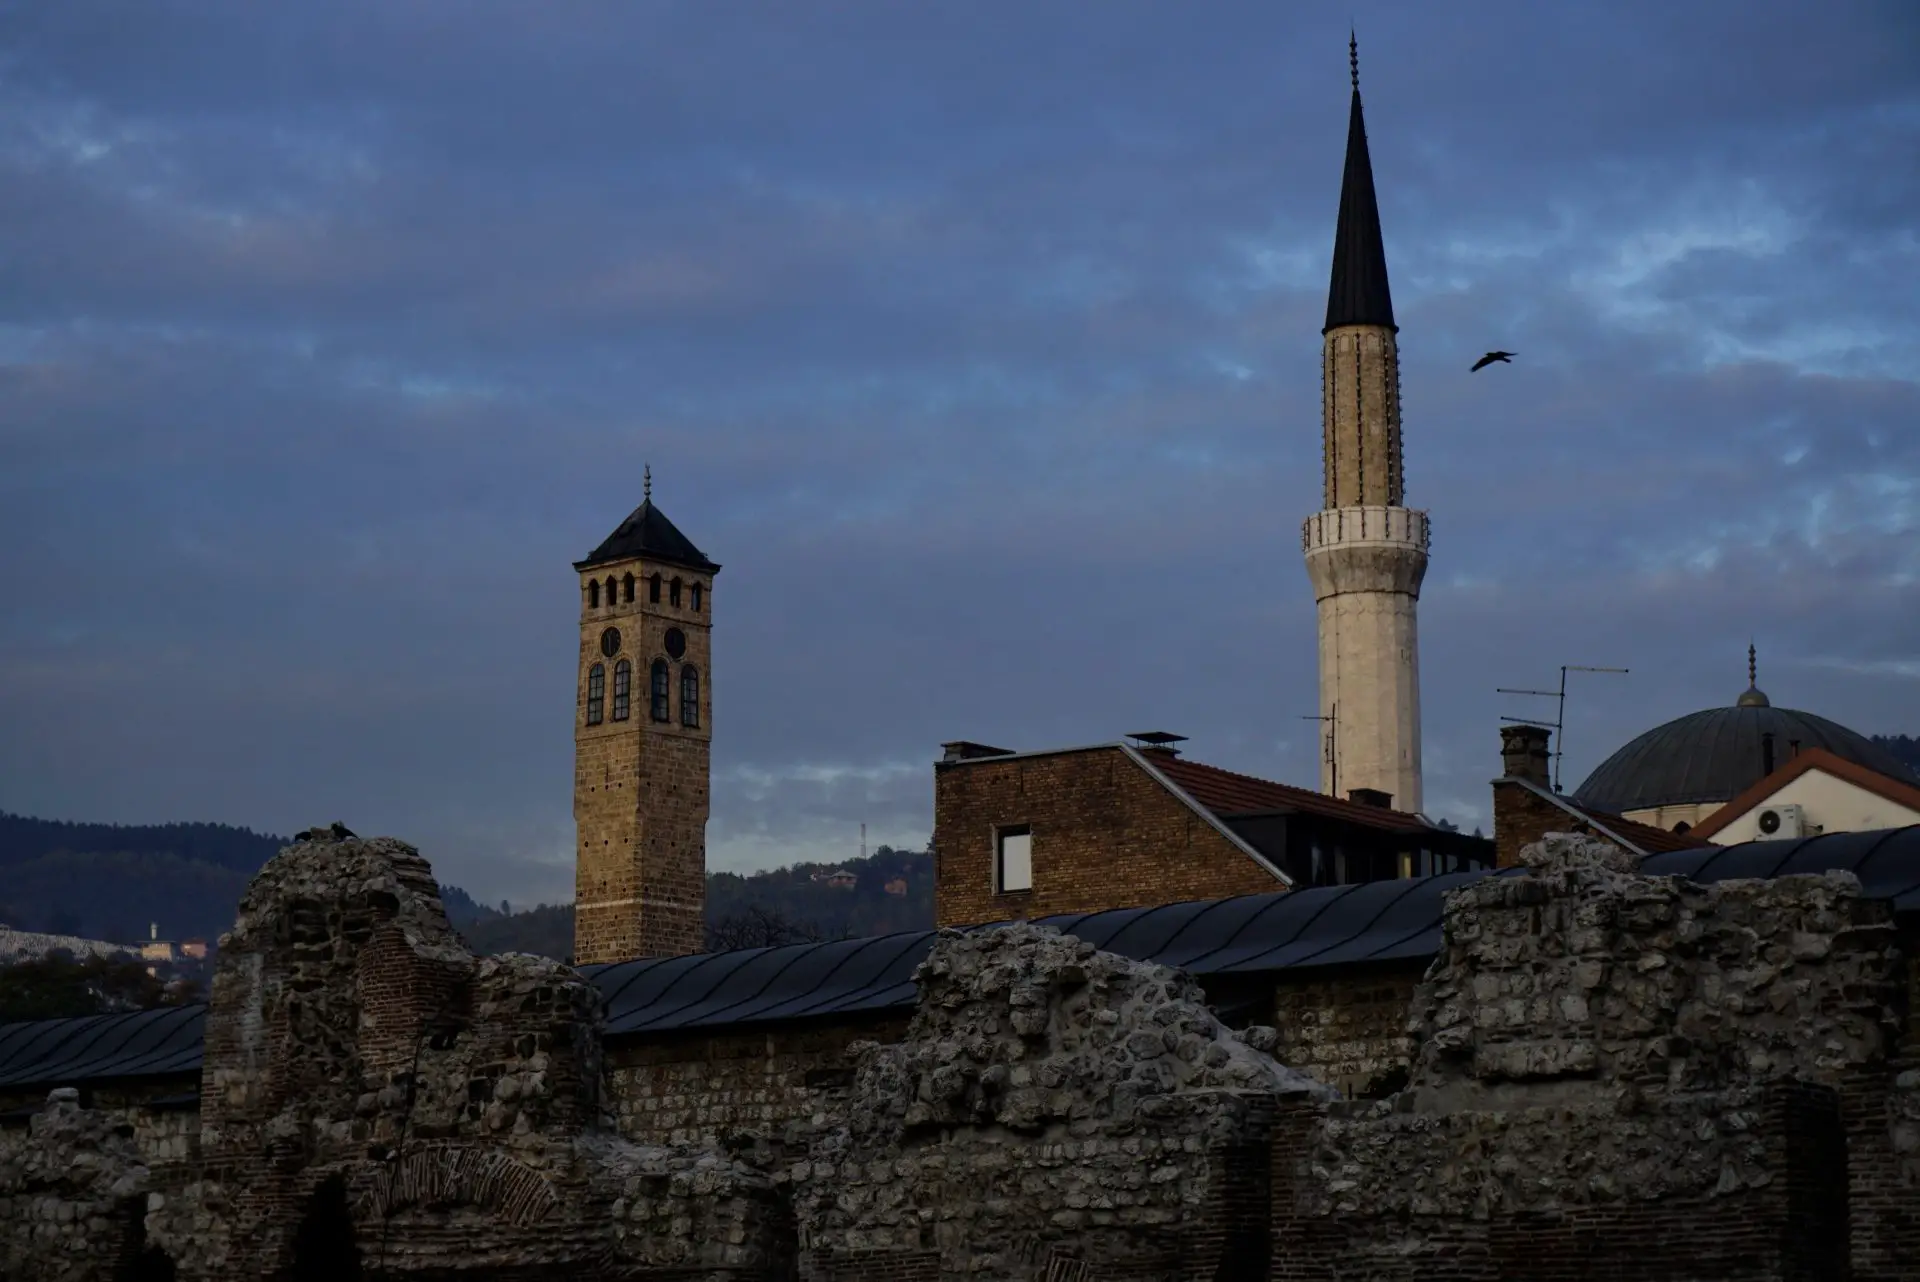 Ruins of Tašlihan Caravanserai, Sarajevo, Bosnia and Herzegovina - Experiencing the Globe